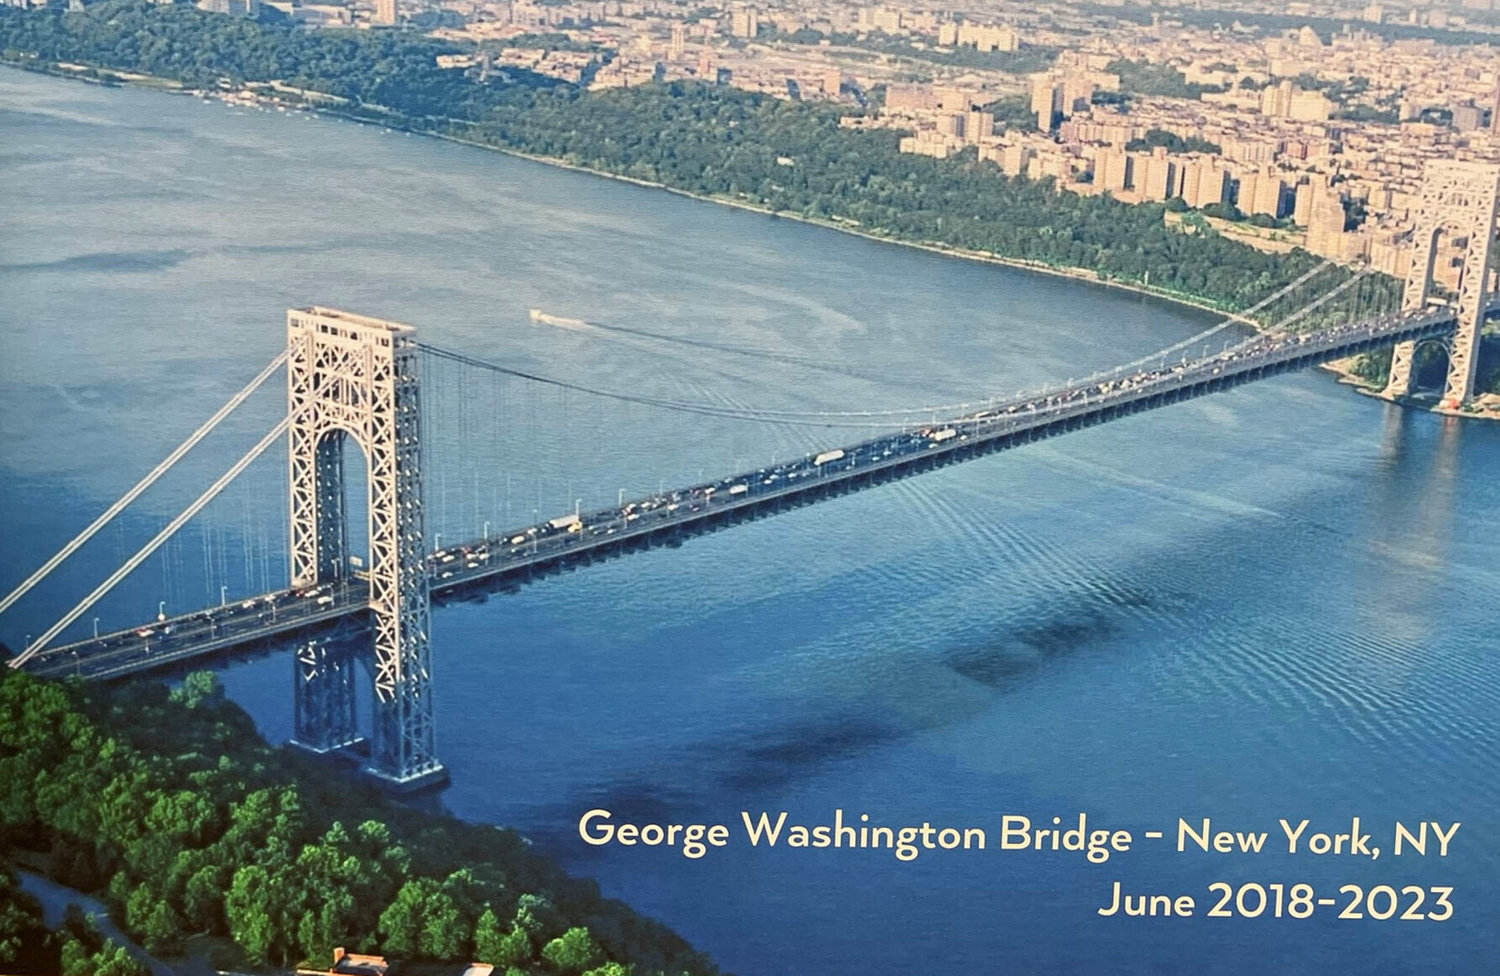 The George Washington Bridge in New York City.